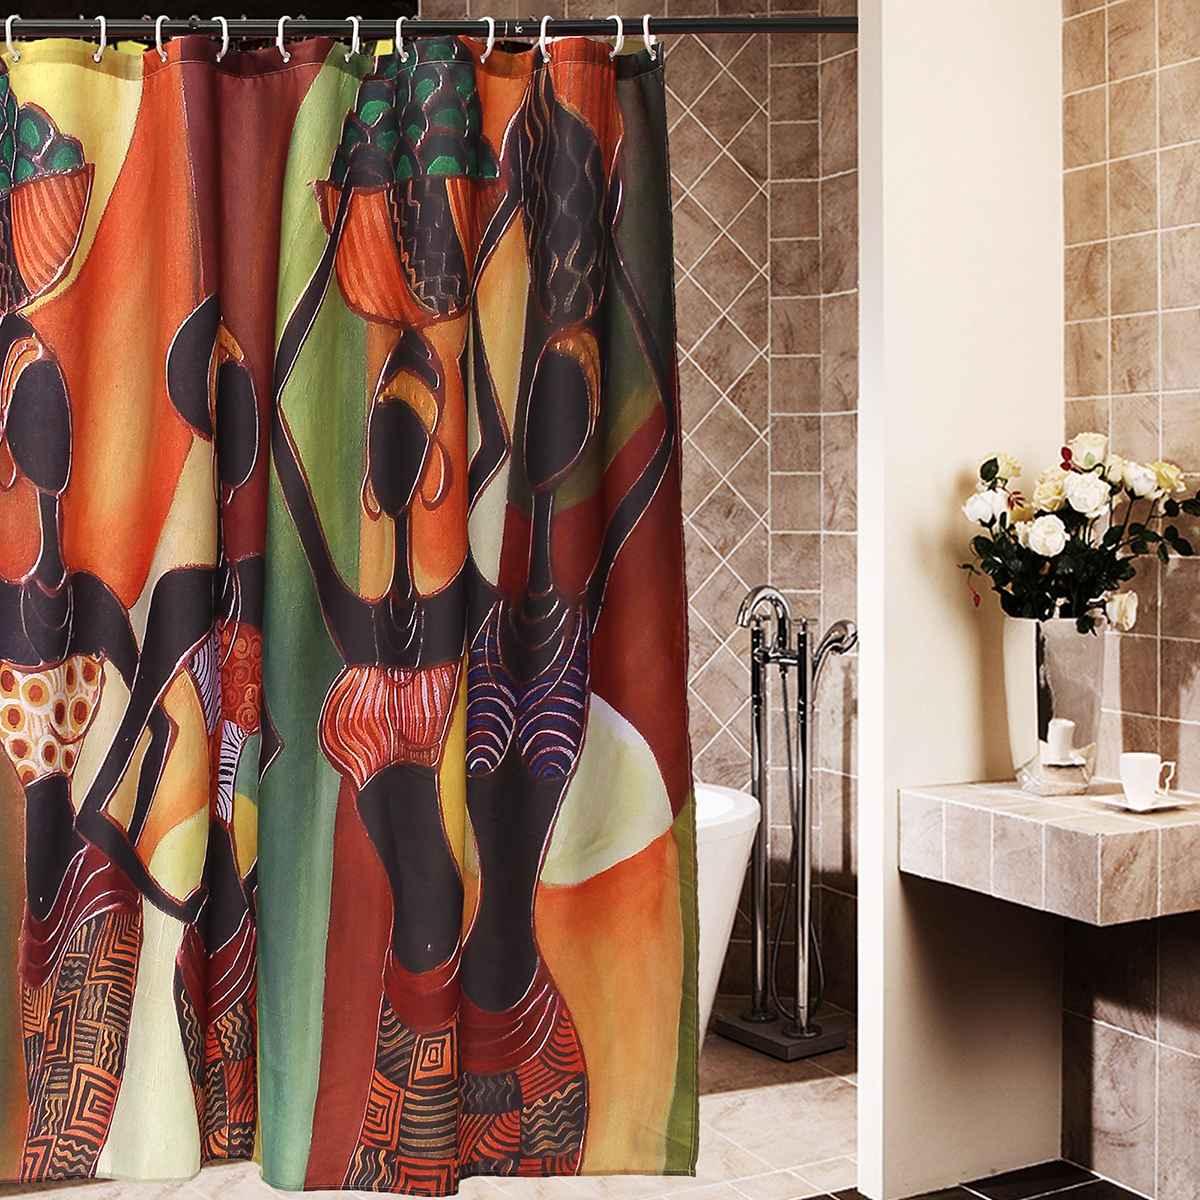 4pcs/set African Women Waterproof Shower Curtain with Africa Girl Non-Slip Bath Mat Rugs Carpet Kit (B&2)(B&4)(1U65)